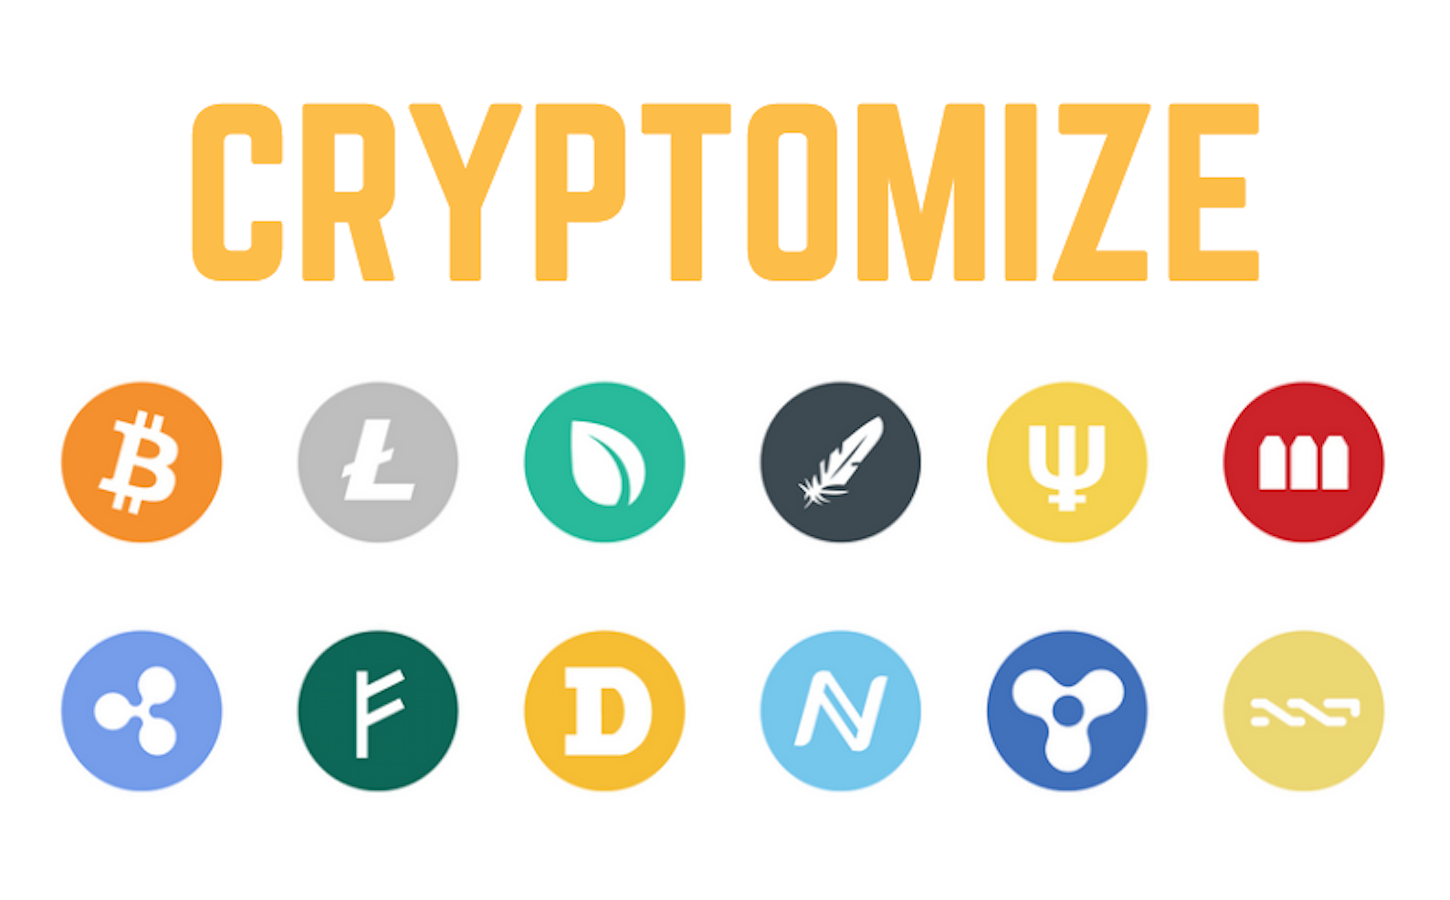 Cryptomize